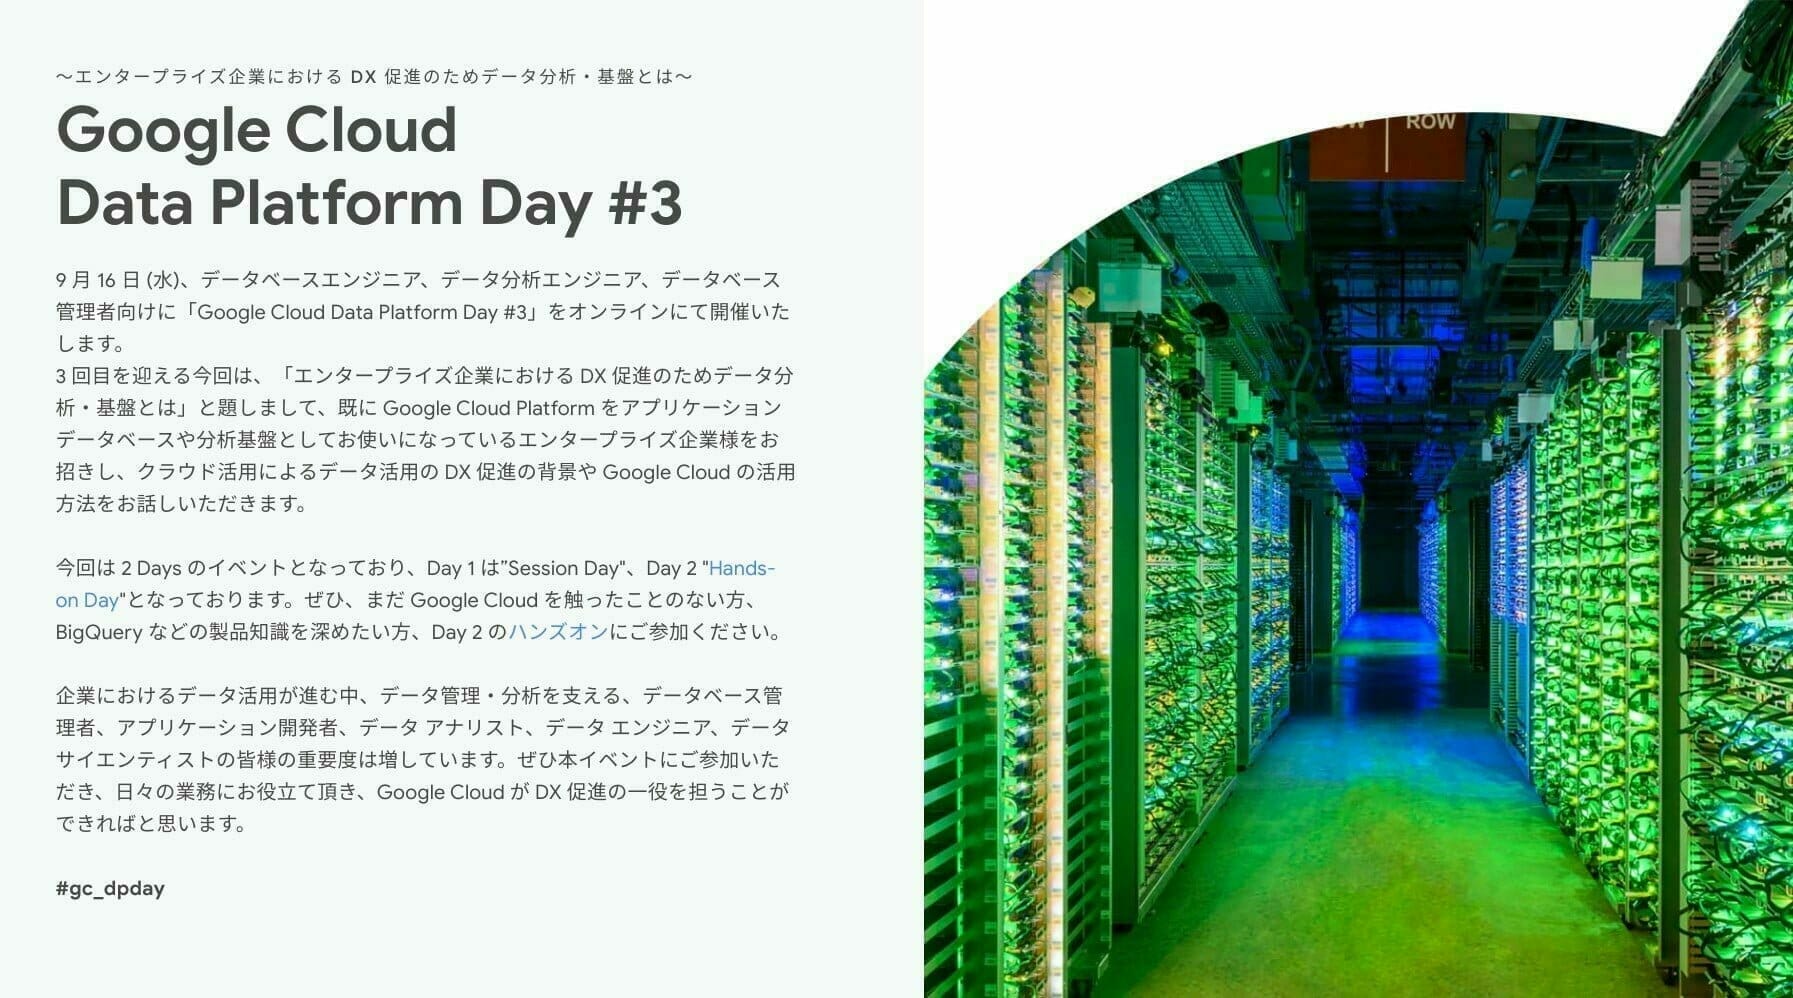 Google Cloud Data Platform Day #3